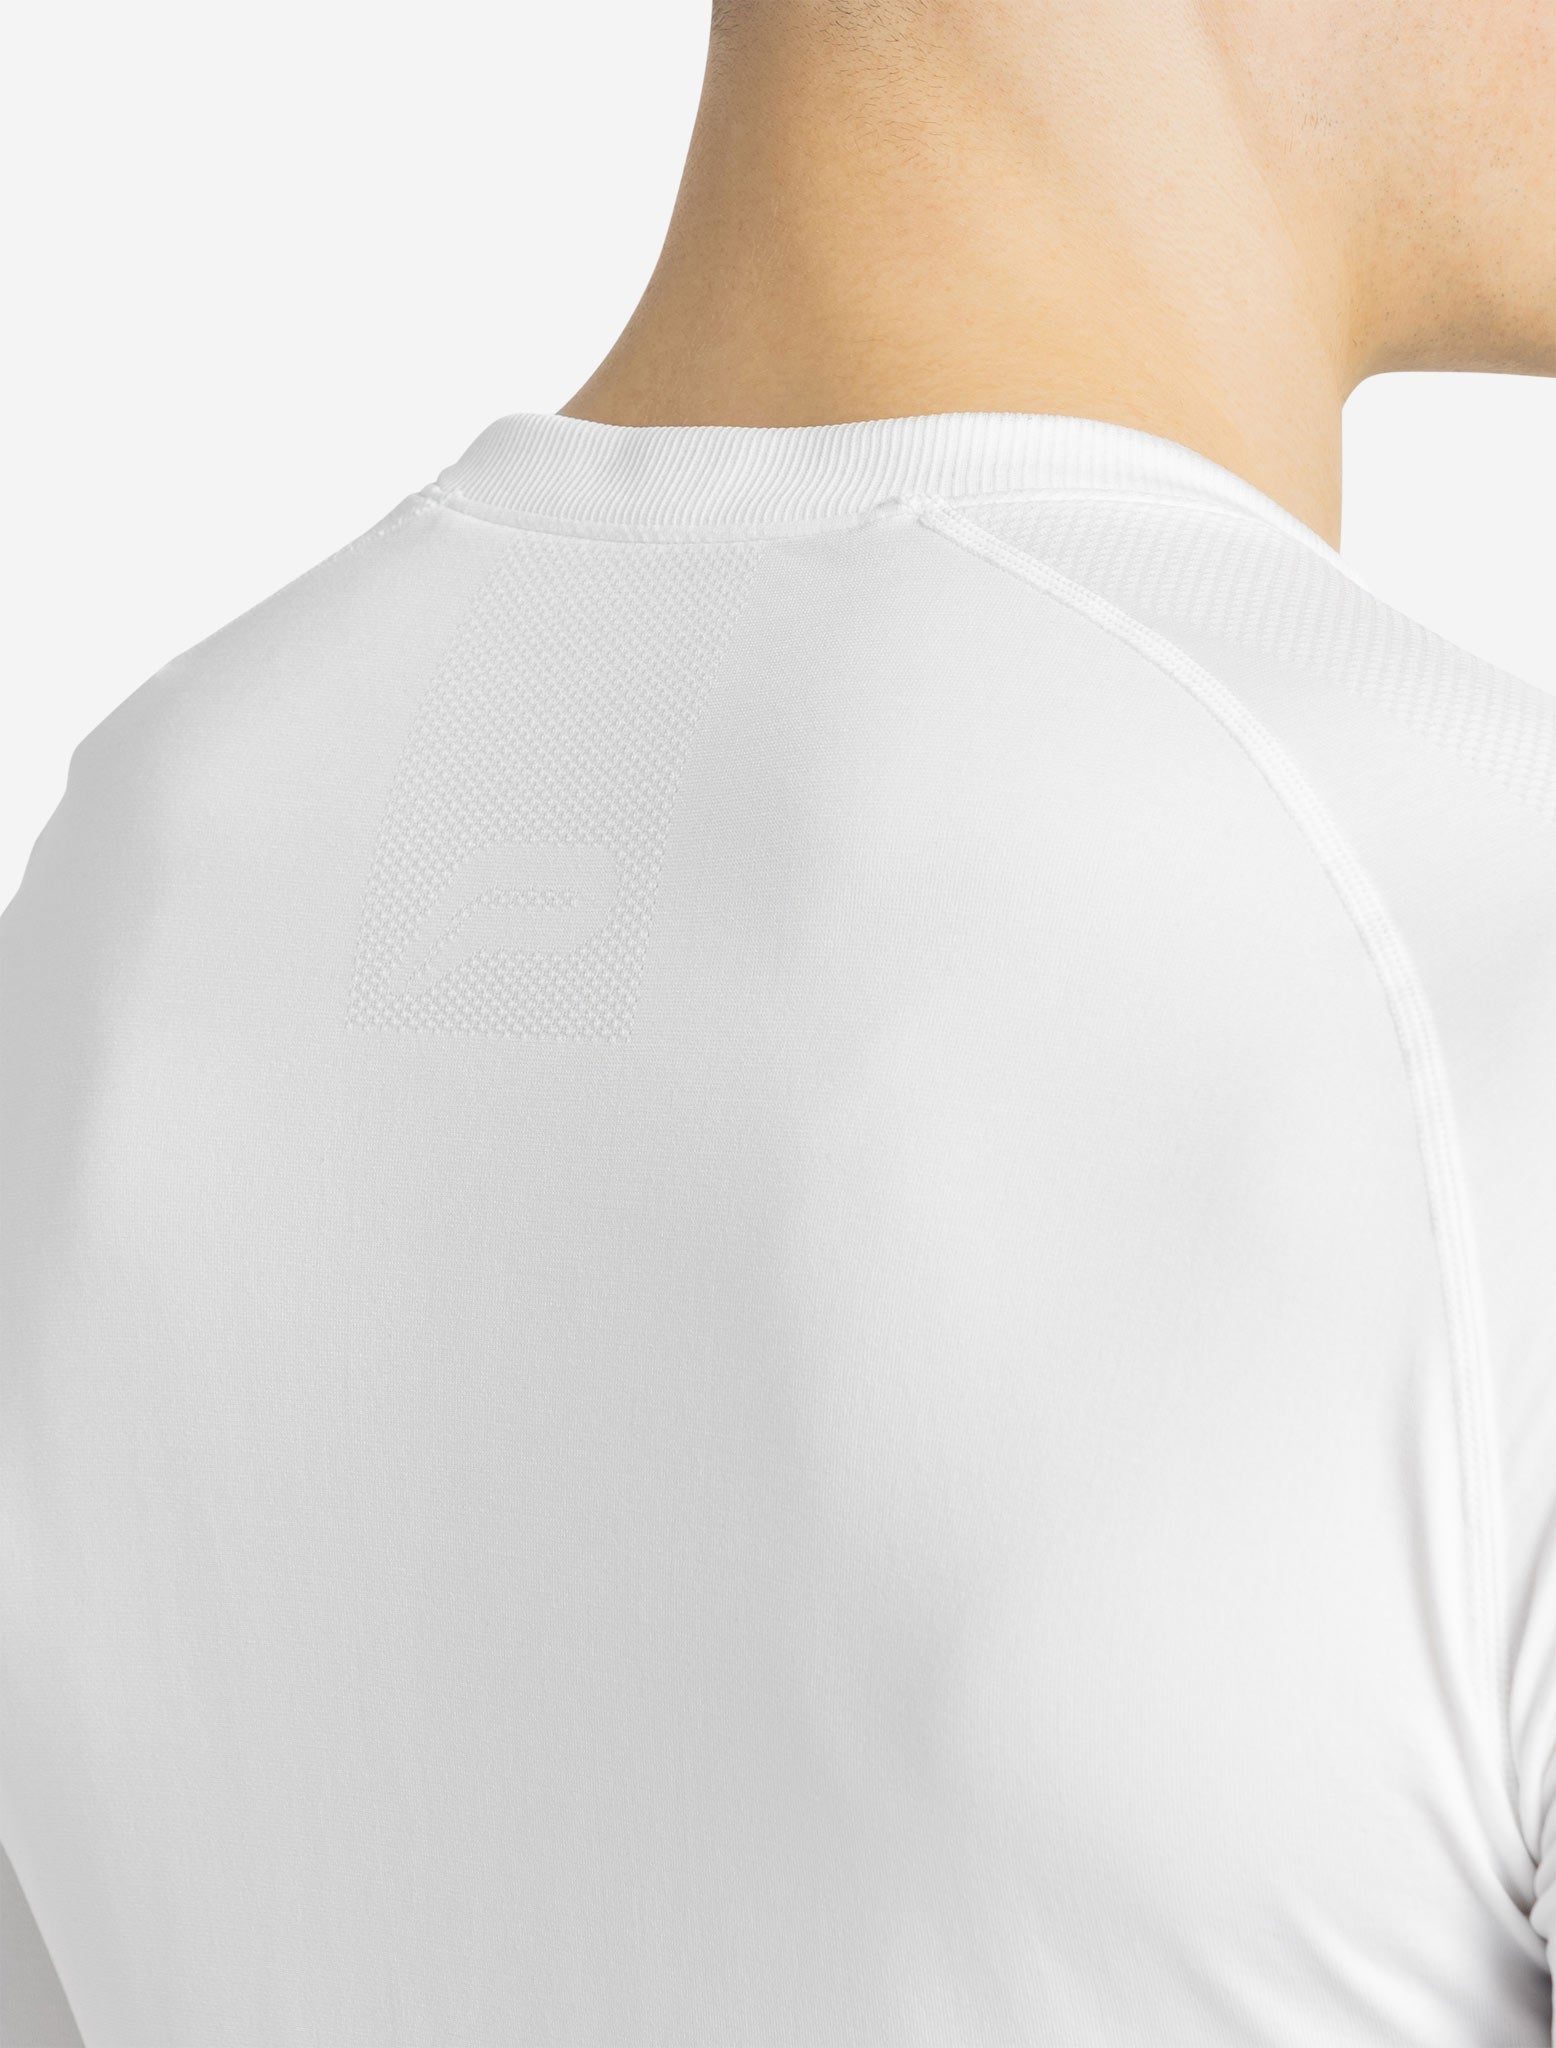 Men's Seamless T-Shirt | White | Pursue Fitness